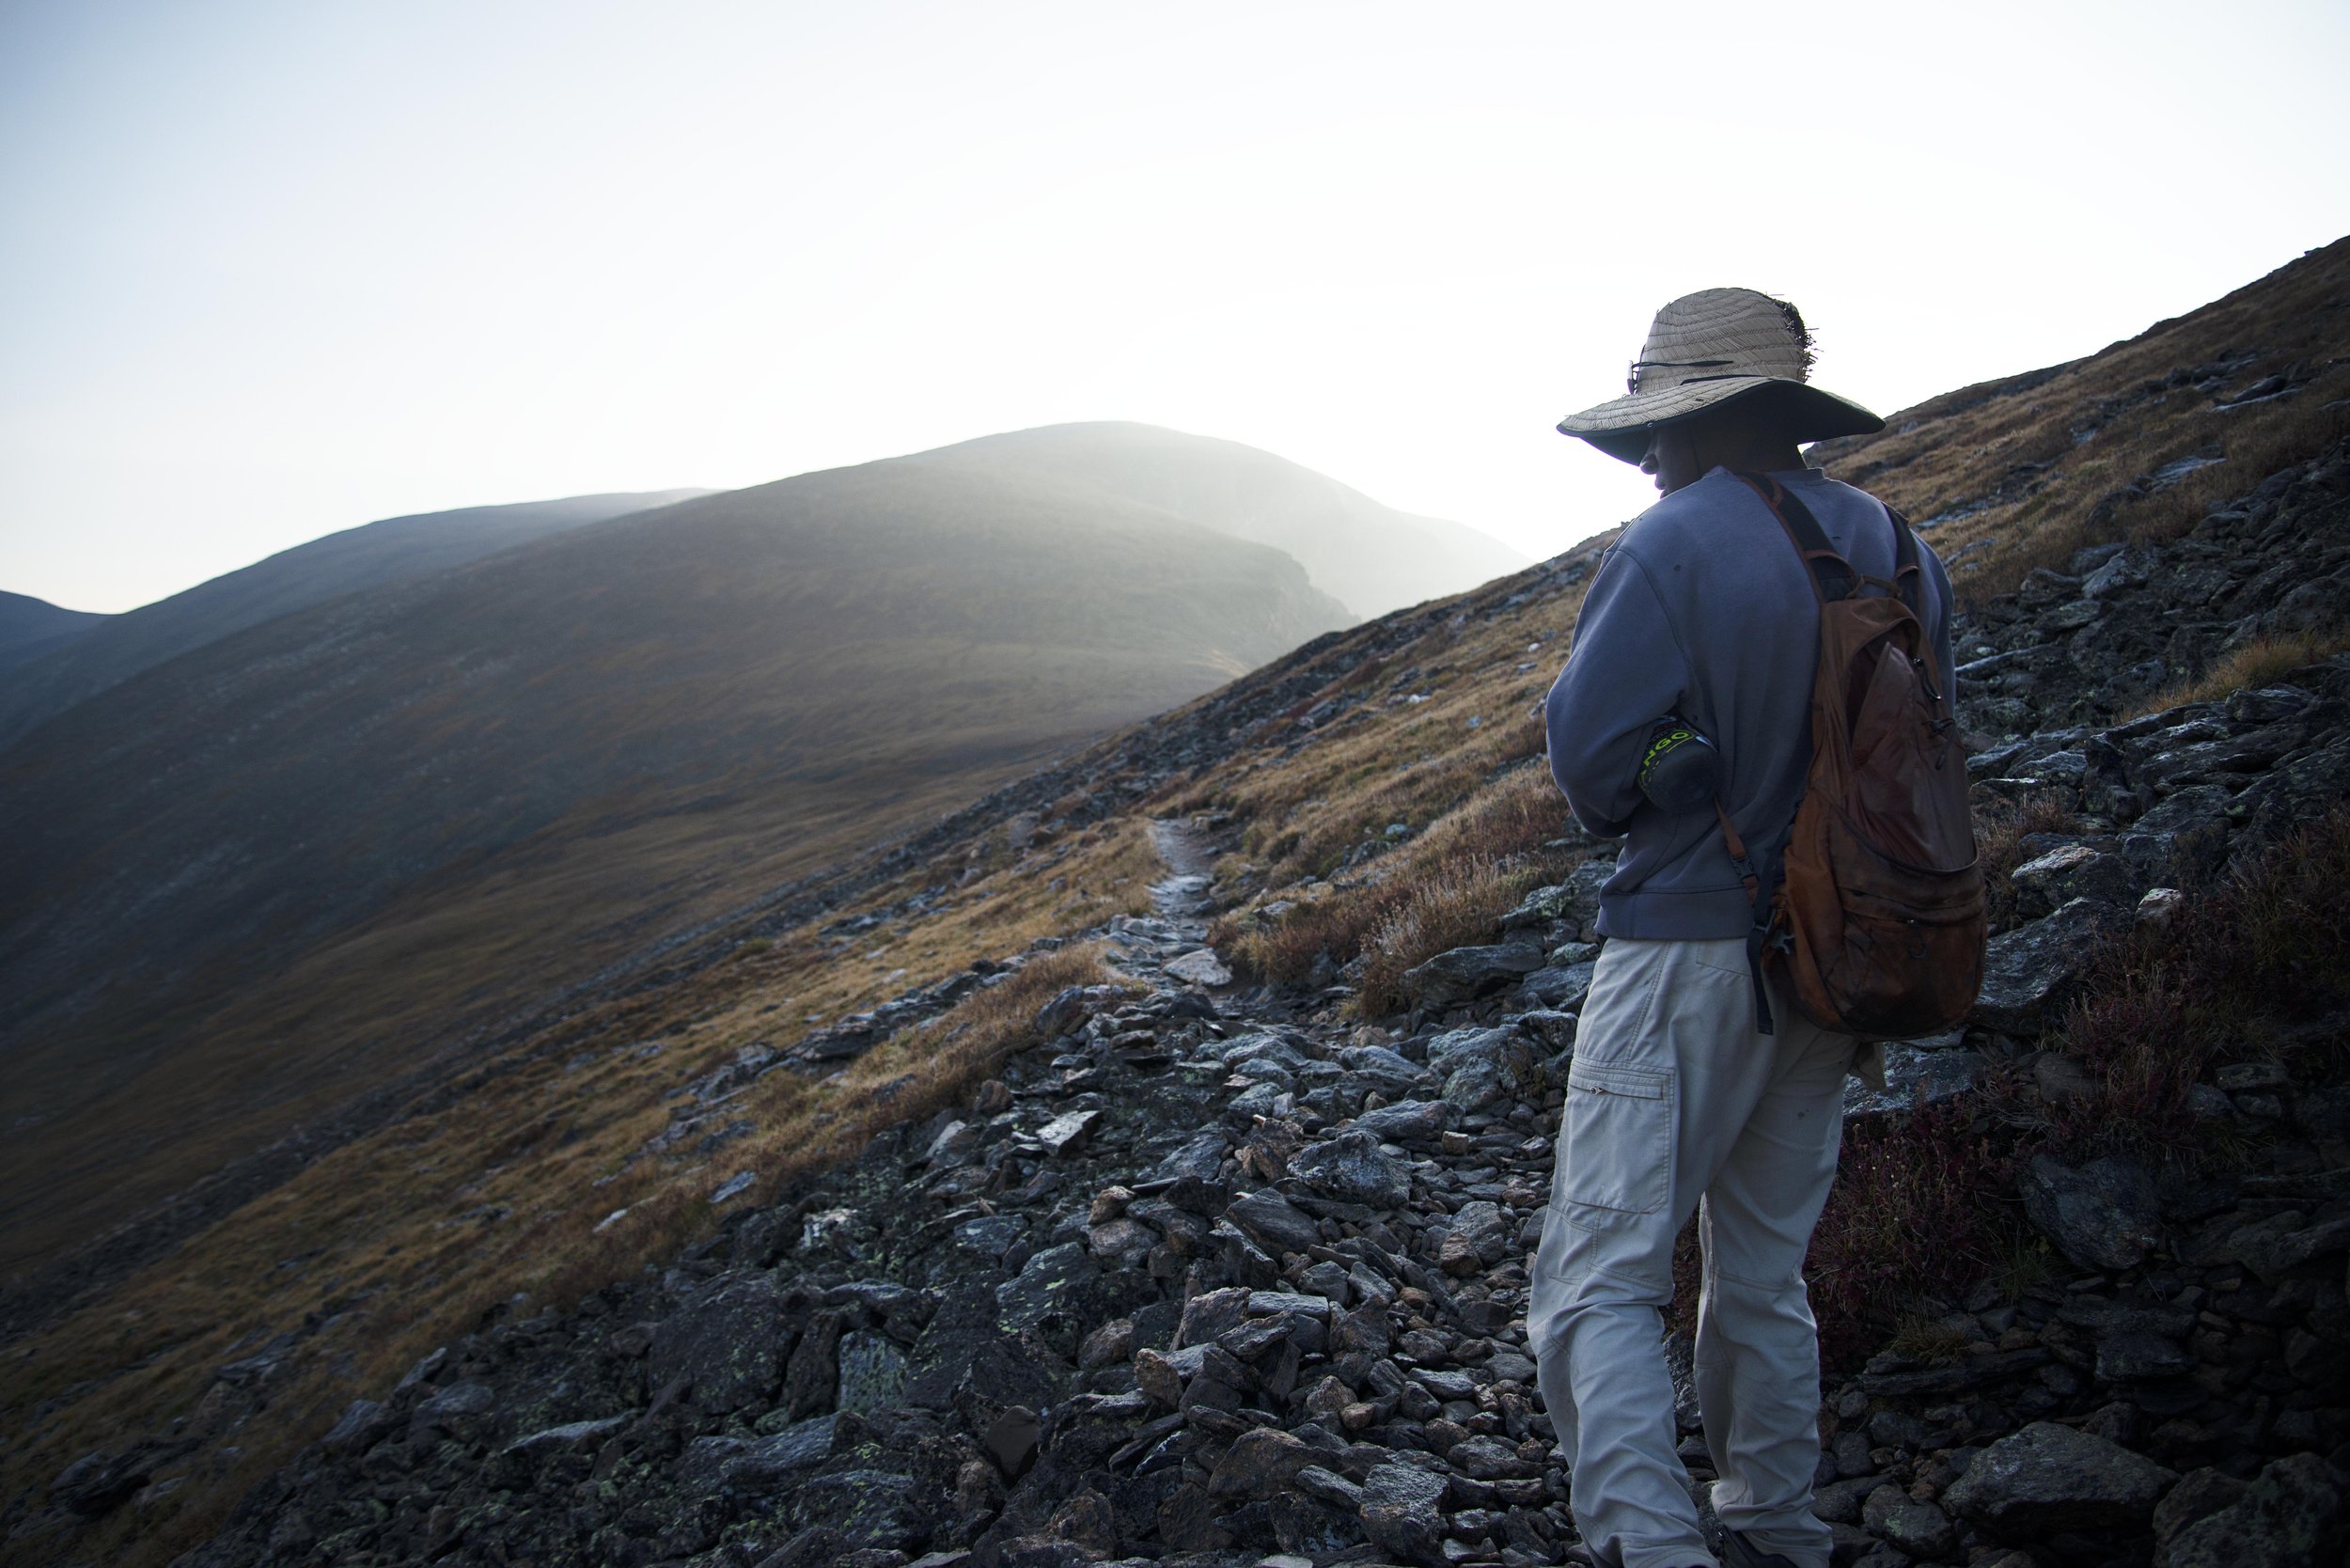  Jordan Barfield hikes in Rocky Mountain National Park near Estes, Co. on Sept. 6, 2021. 